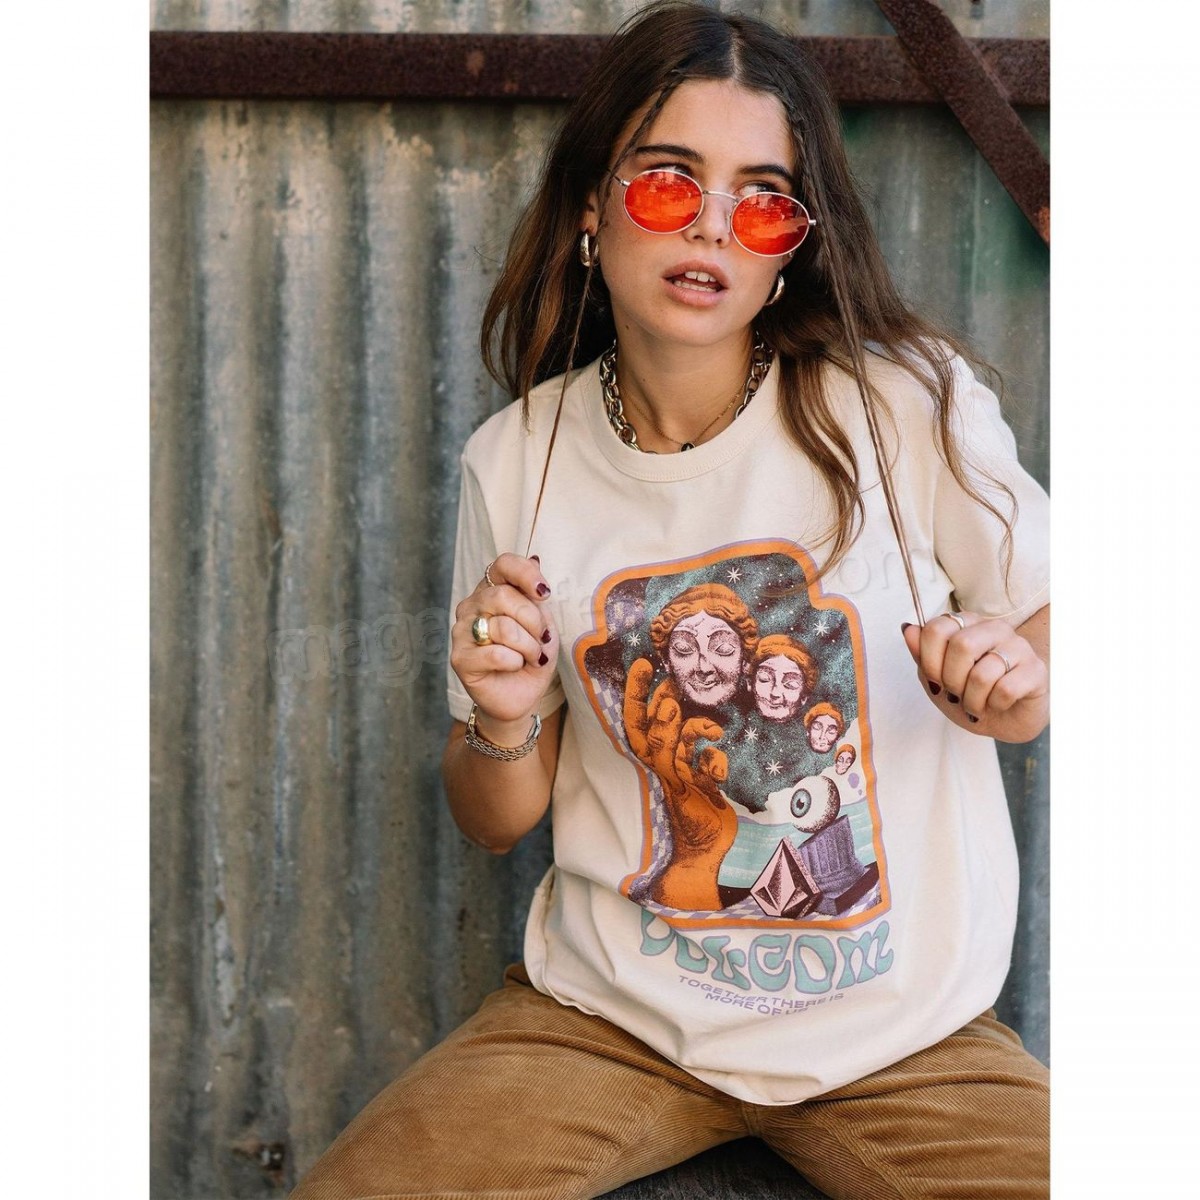 Volcom-Randonnée pédestre femme VOLCOM T-shirt Volcom Max Loeffler Tee Sand Femme en solde - -1